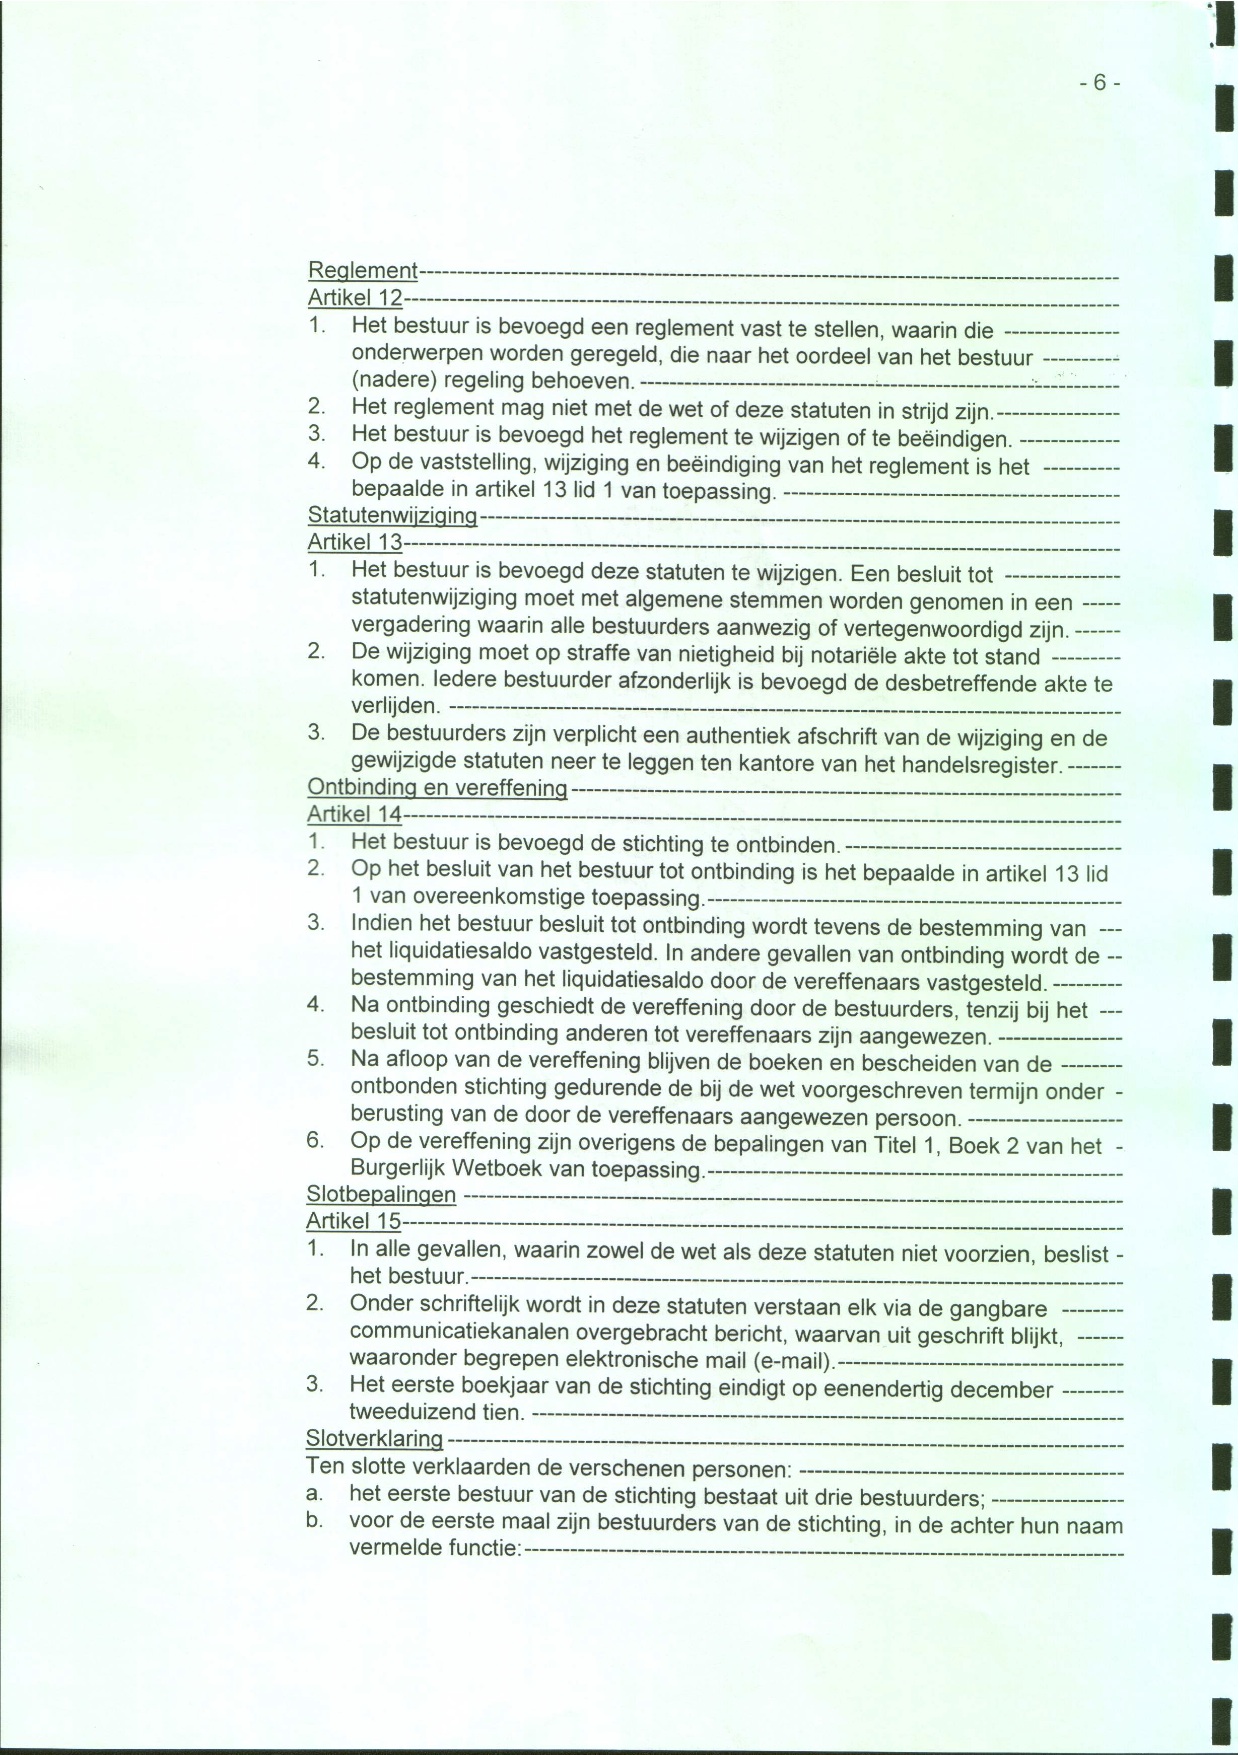 Statuten 15 apr 2010 pagina 6.jpg